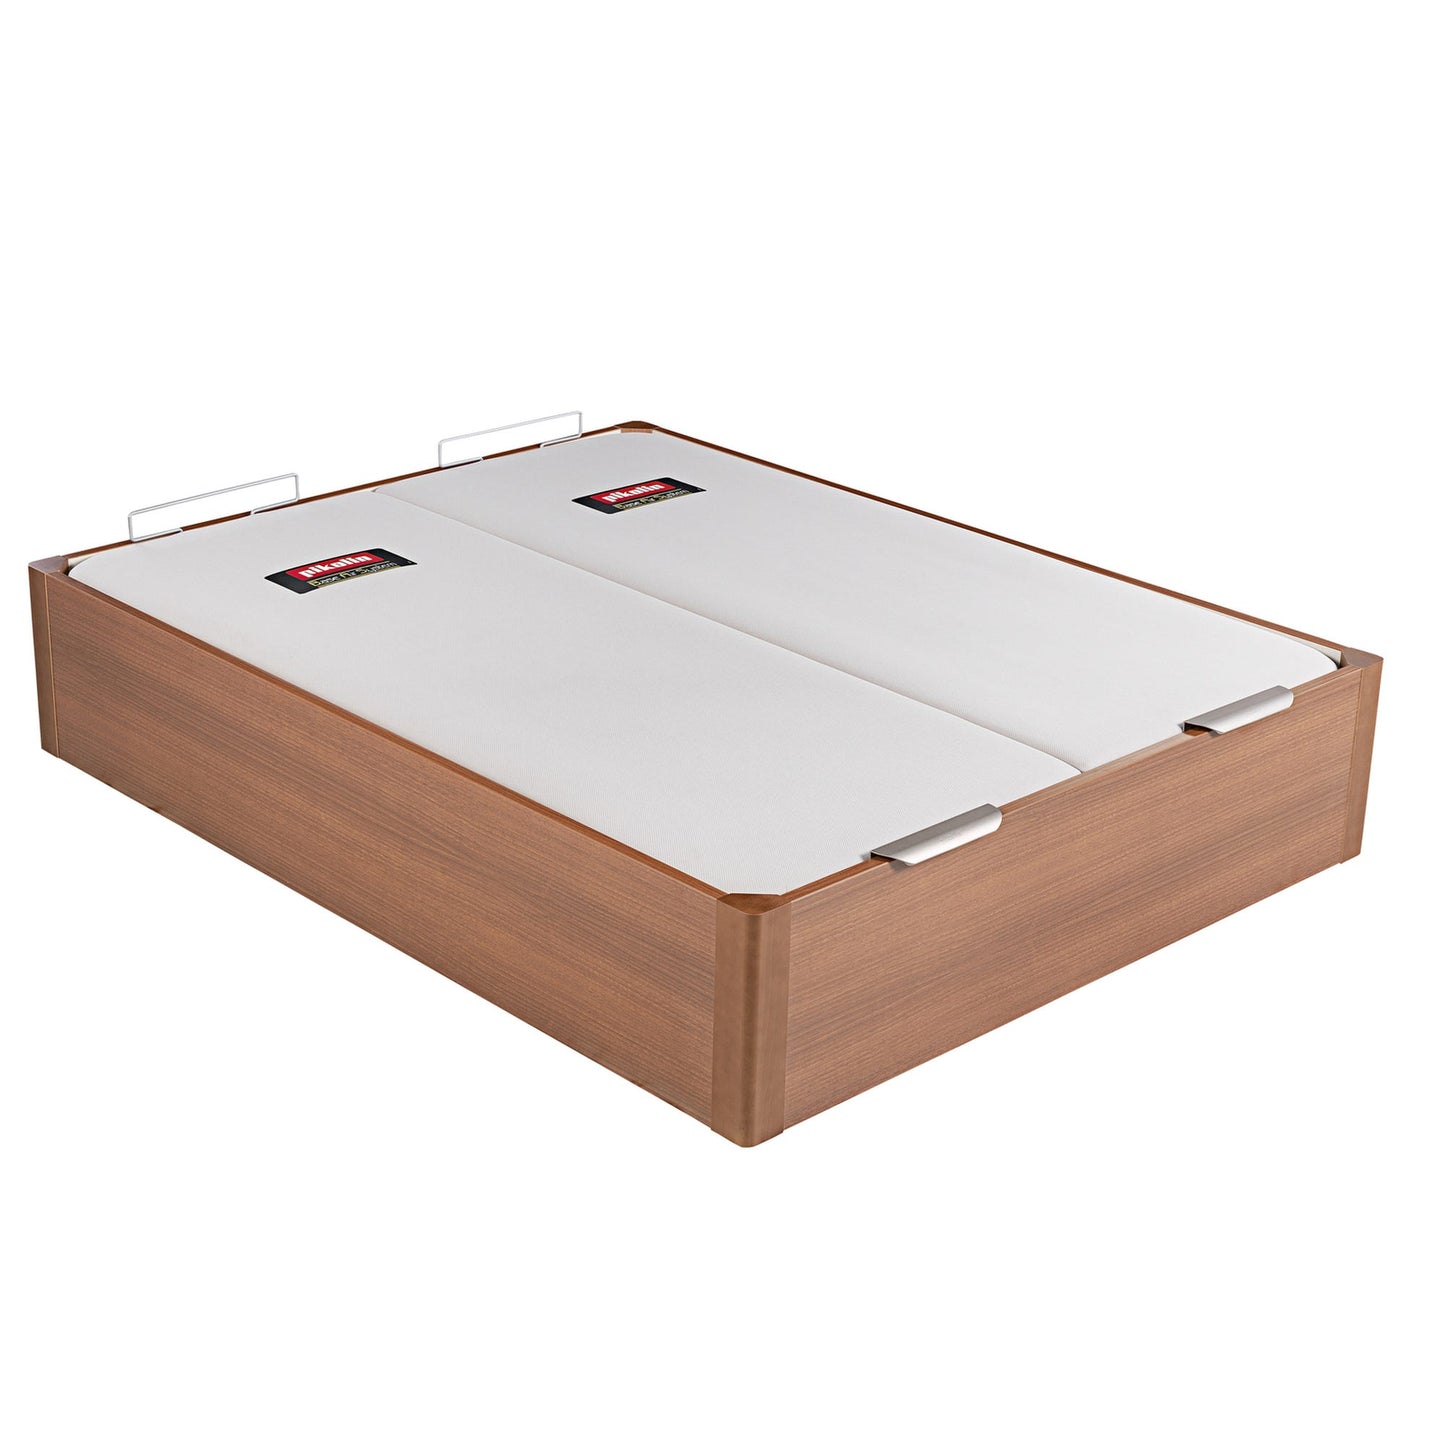 Canapé abatible de madera de alta capacidad tapa doble de color cerezo - DESIGN - 180x210